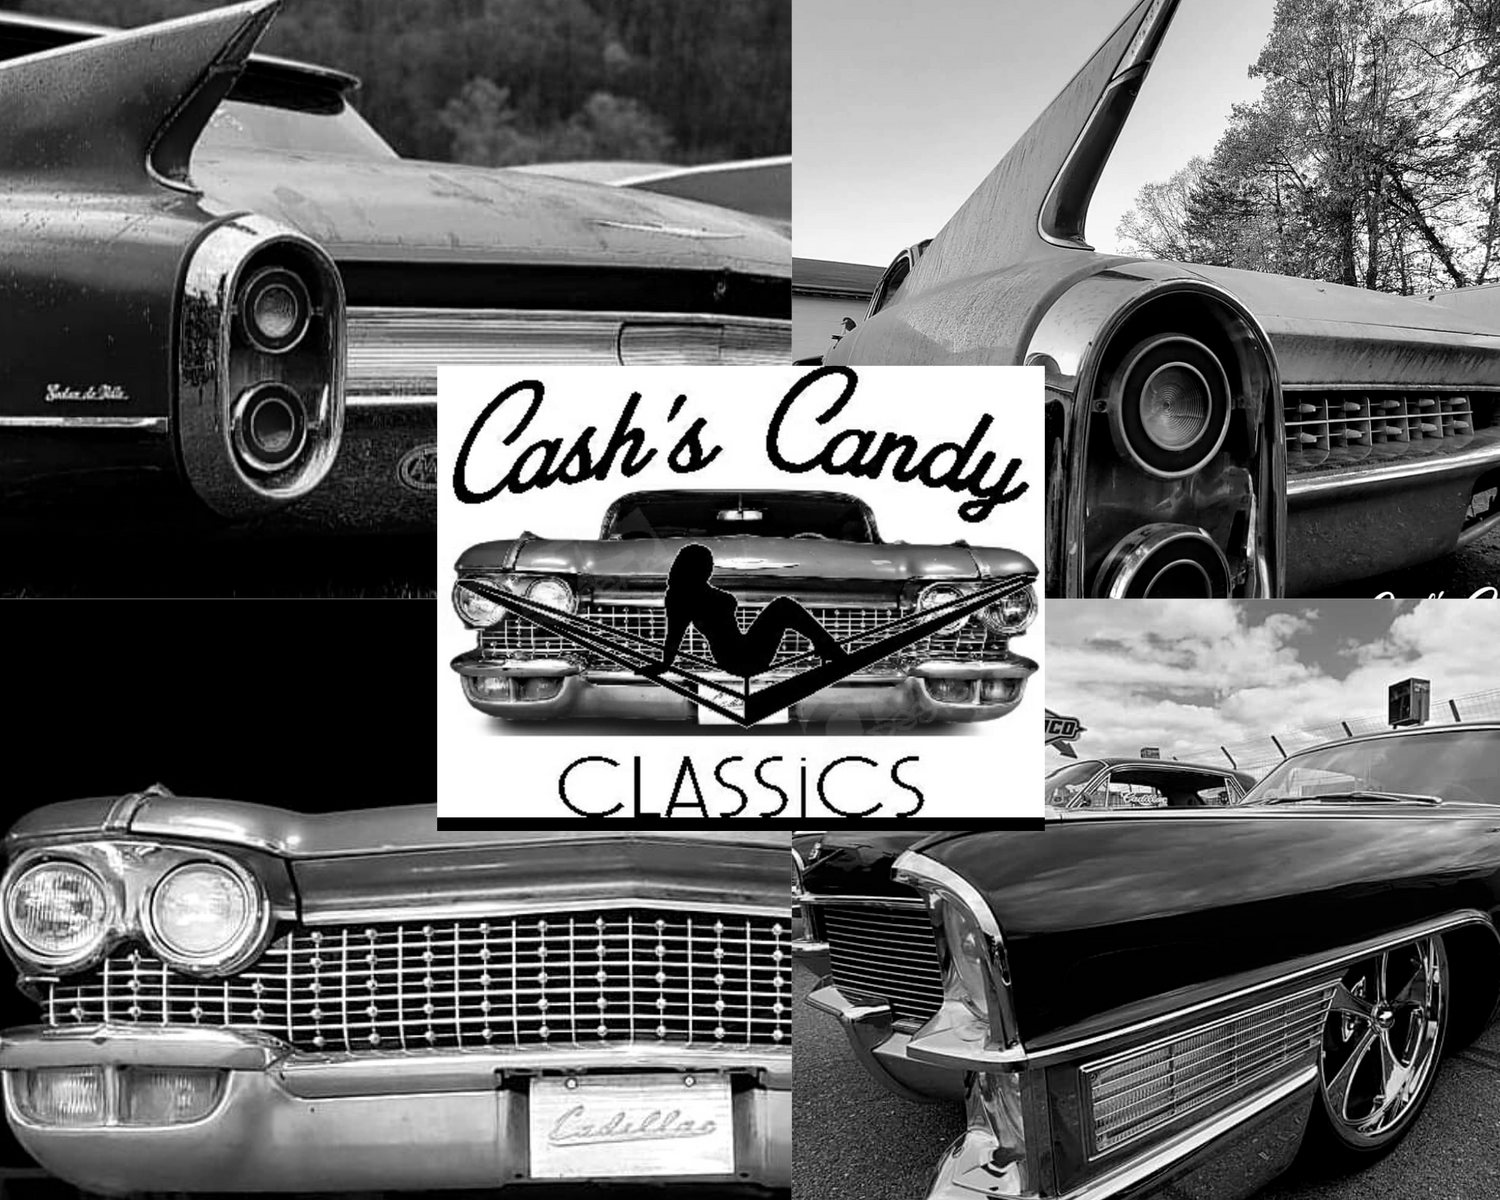 Cash's Candy Classics